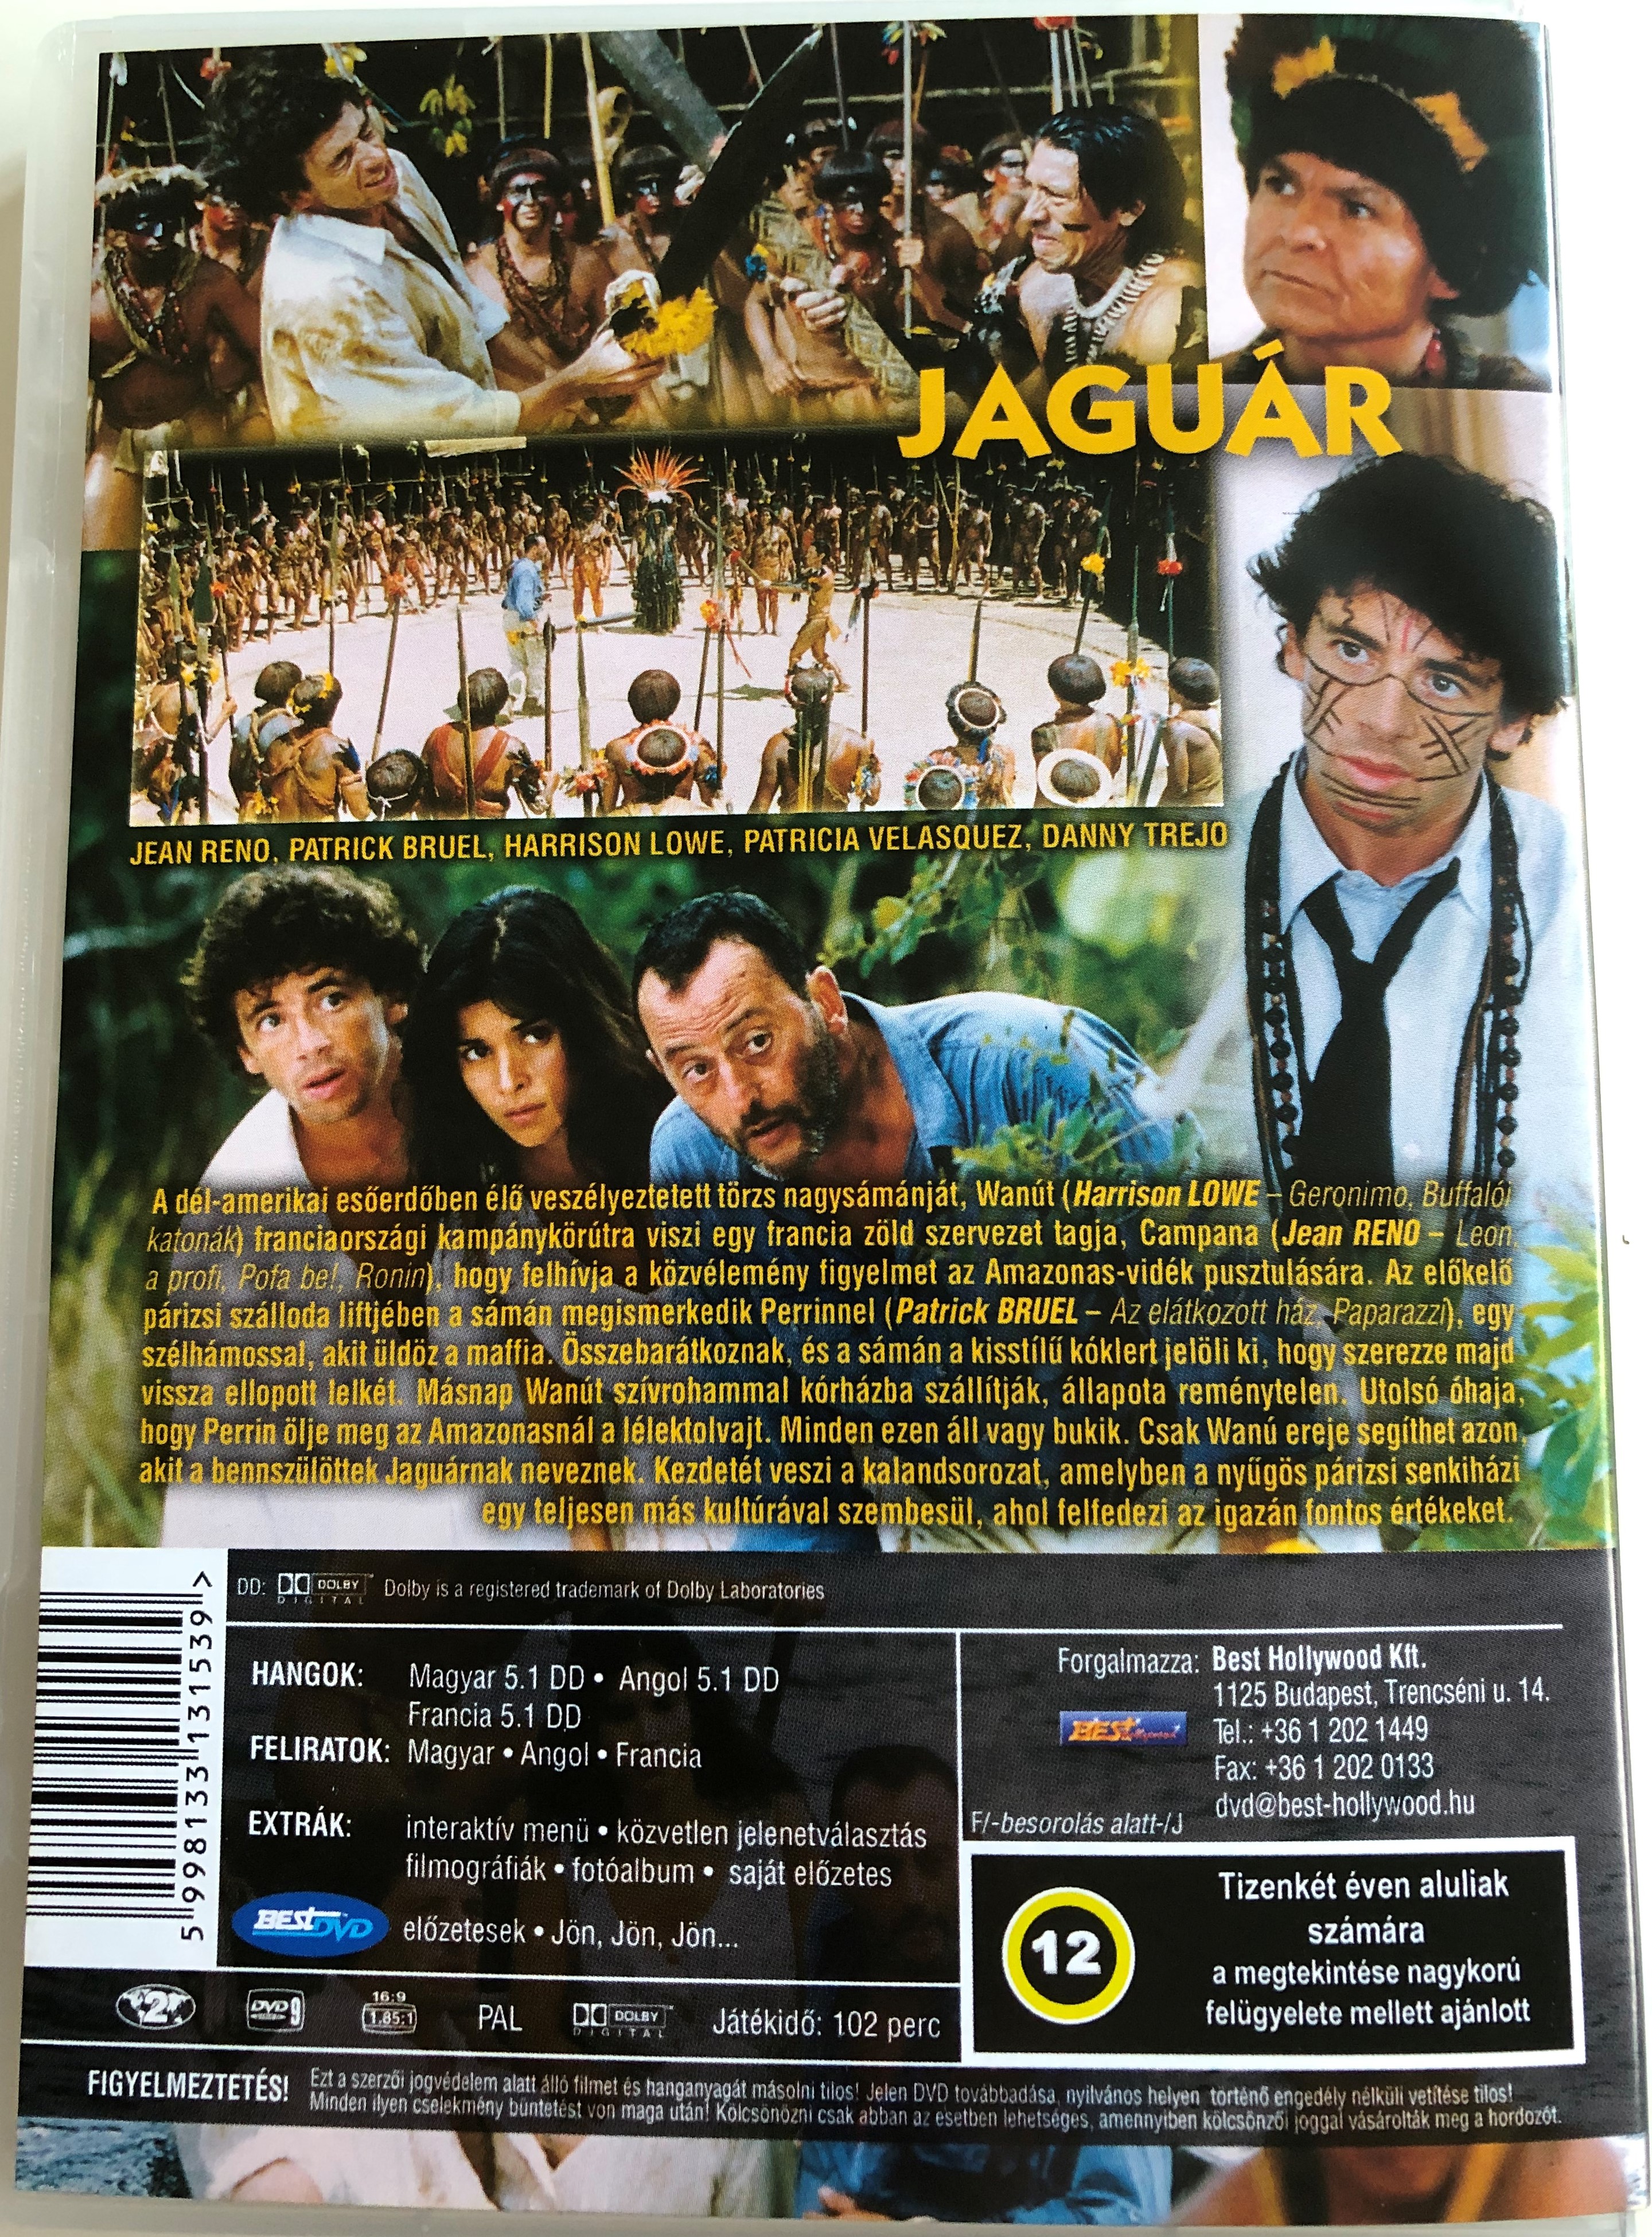 Le jaguar DVD 1996 Jaguár  2.JPG